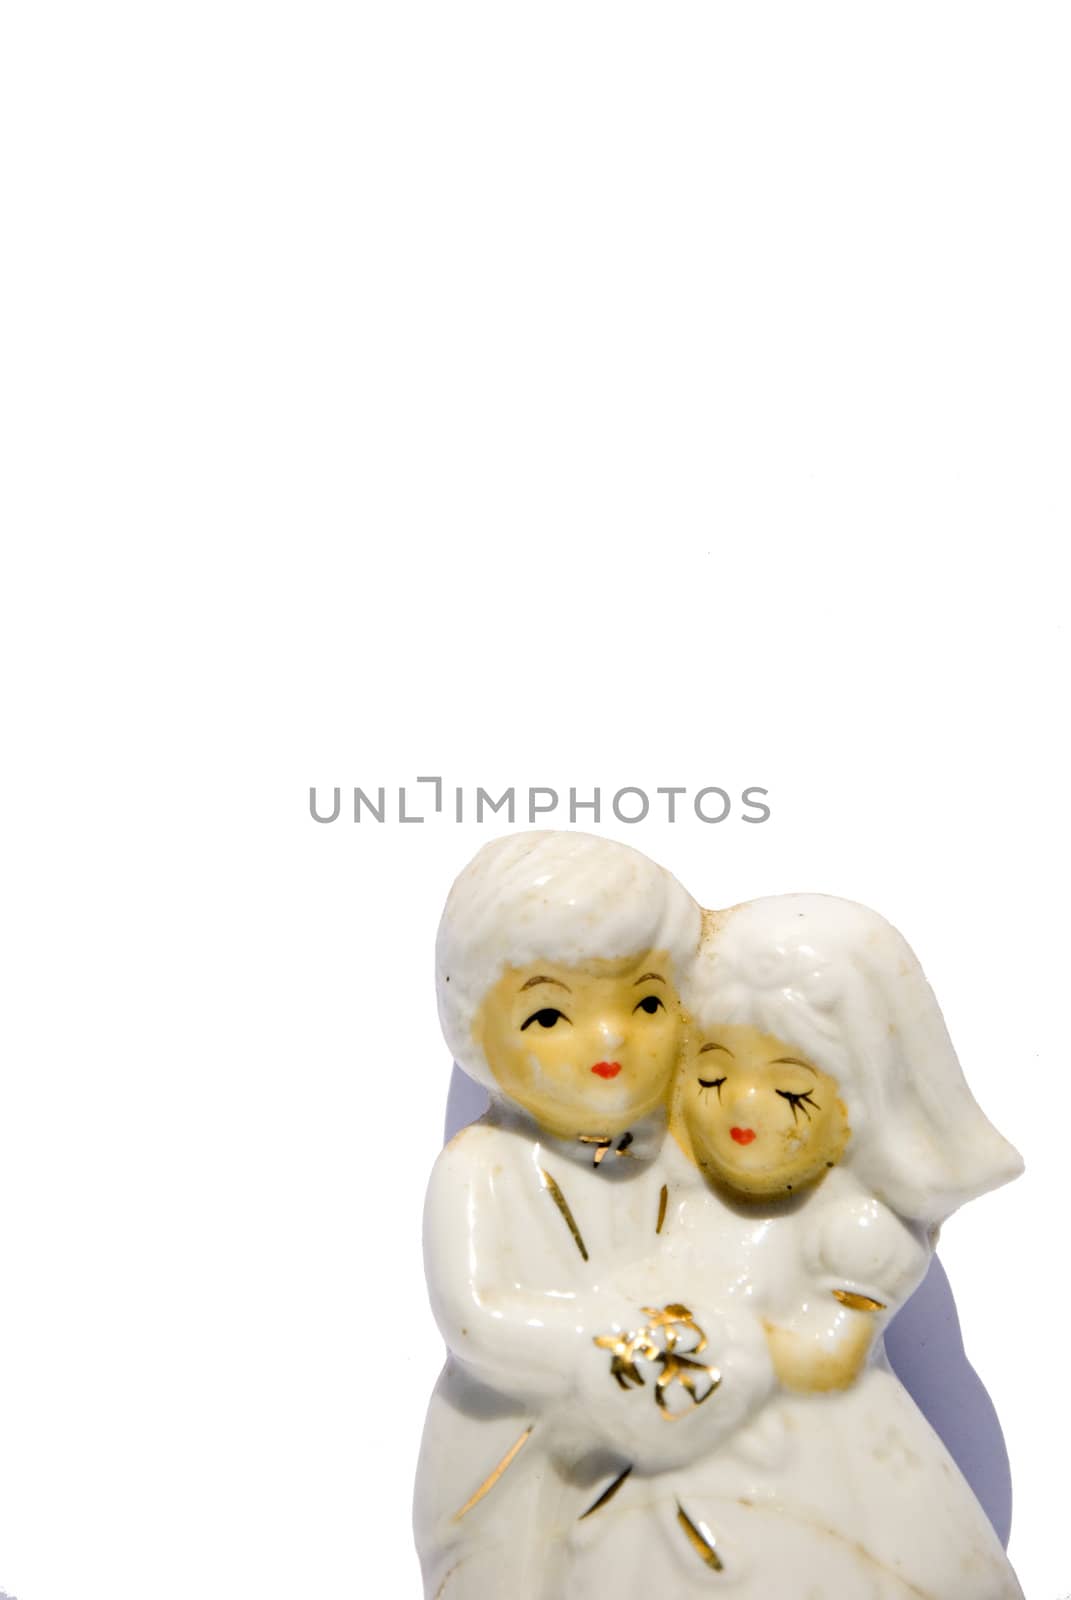 Retro ceramic couple - a boy and a girl